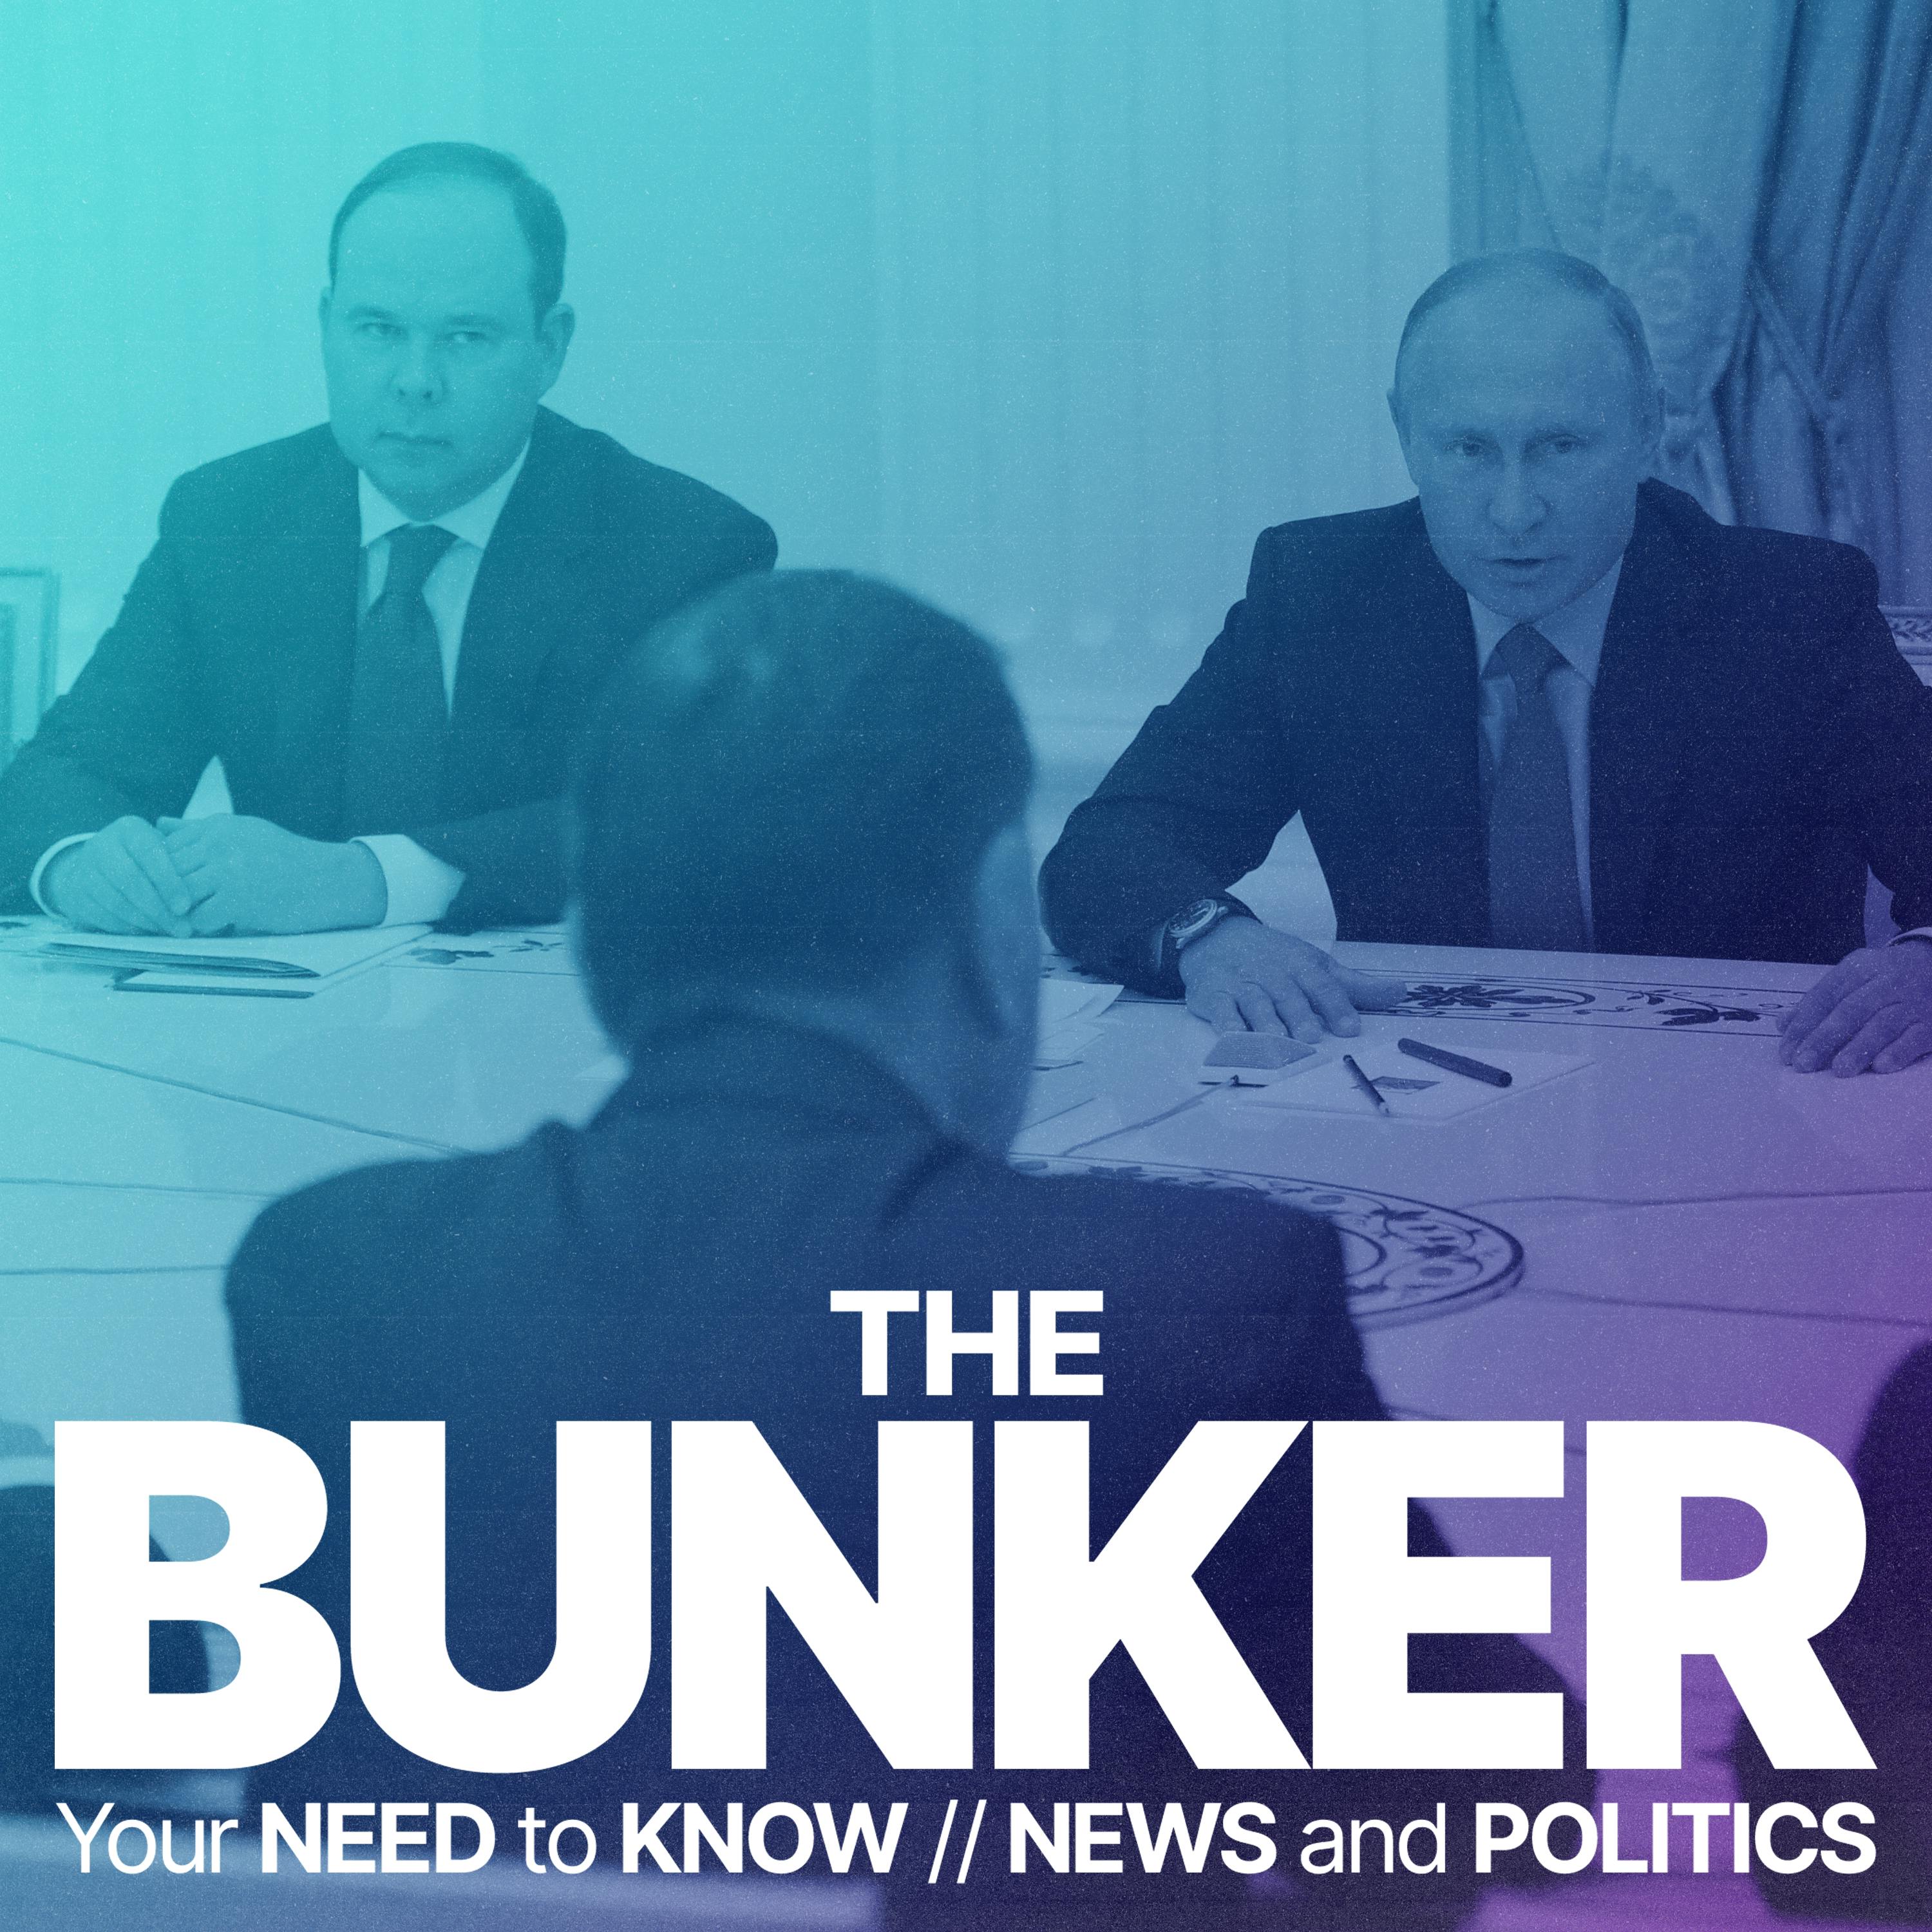 The Kremlin court – how Putin’s inner circle keeps him in power